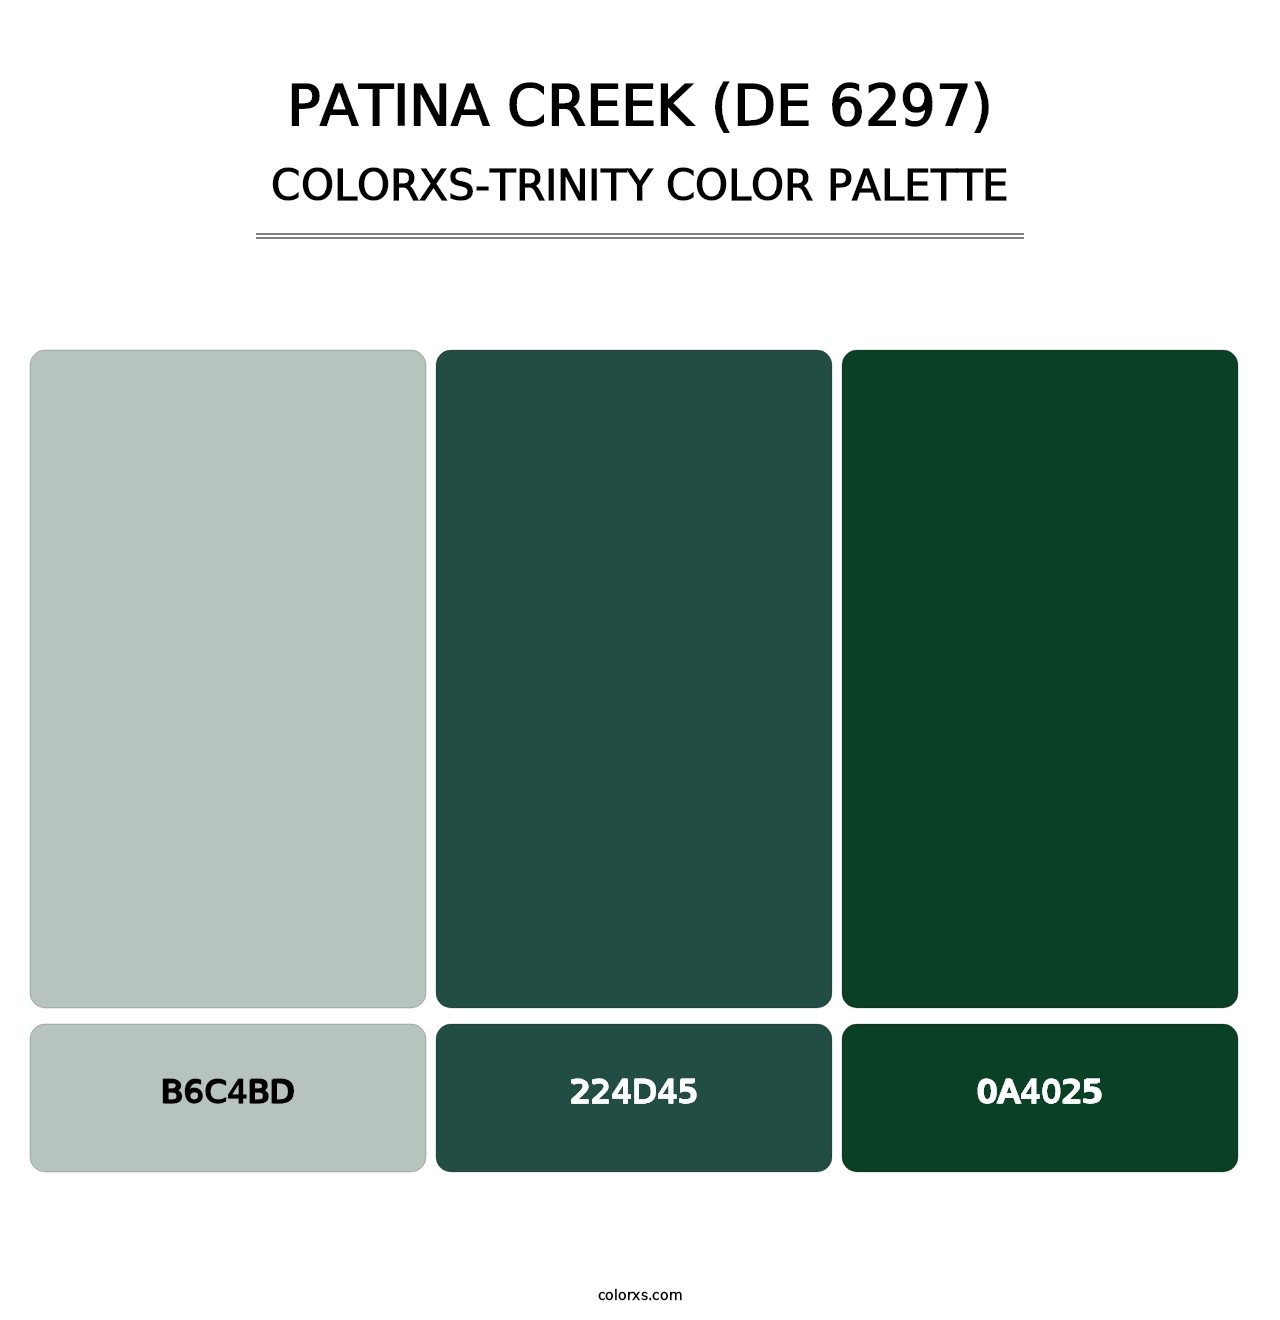 Patina Creek (DE 6297) - Colorxs Trinity Palette